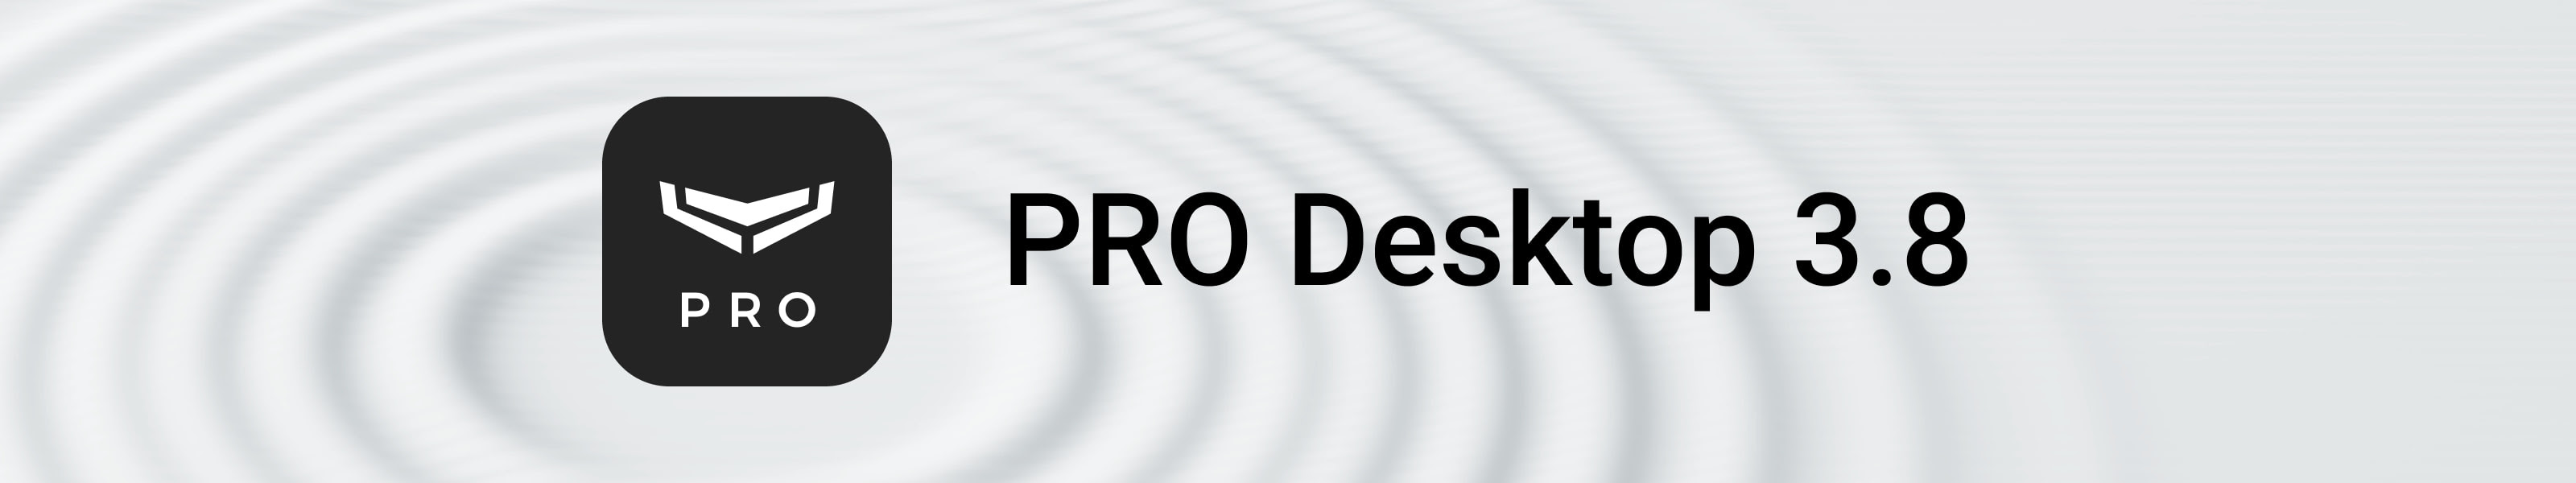 PRO Desktop è già disponibile